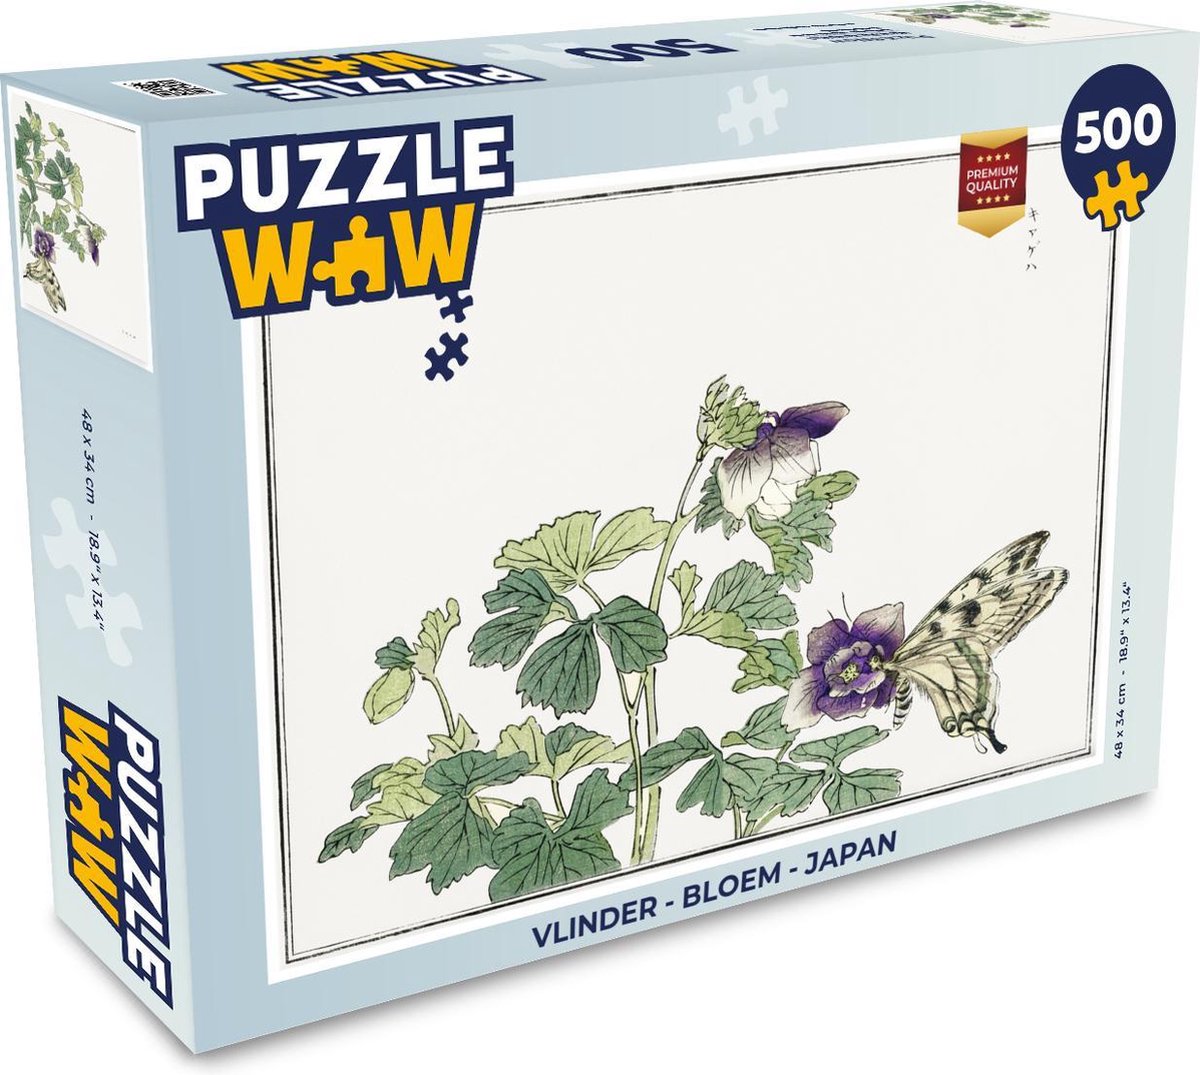 Afbeelding van product PuzzleWow  Puzzel Vlinder - Bloem - Japan - Legpuzzel - Puzzel 500 stukjes